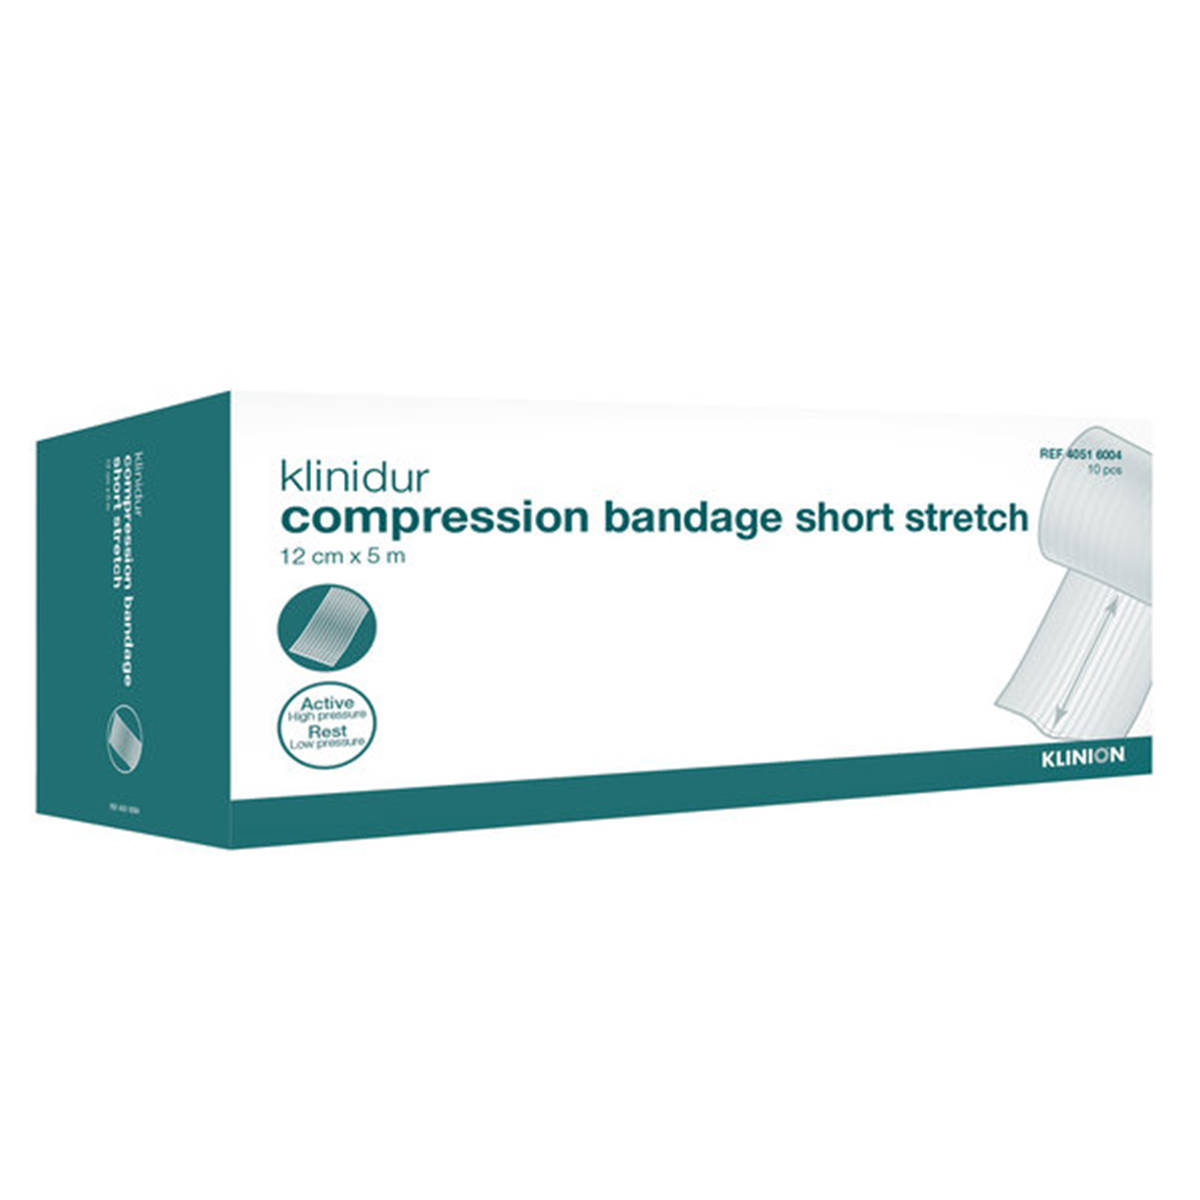 Short stretch compression bandage in box